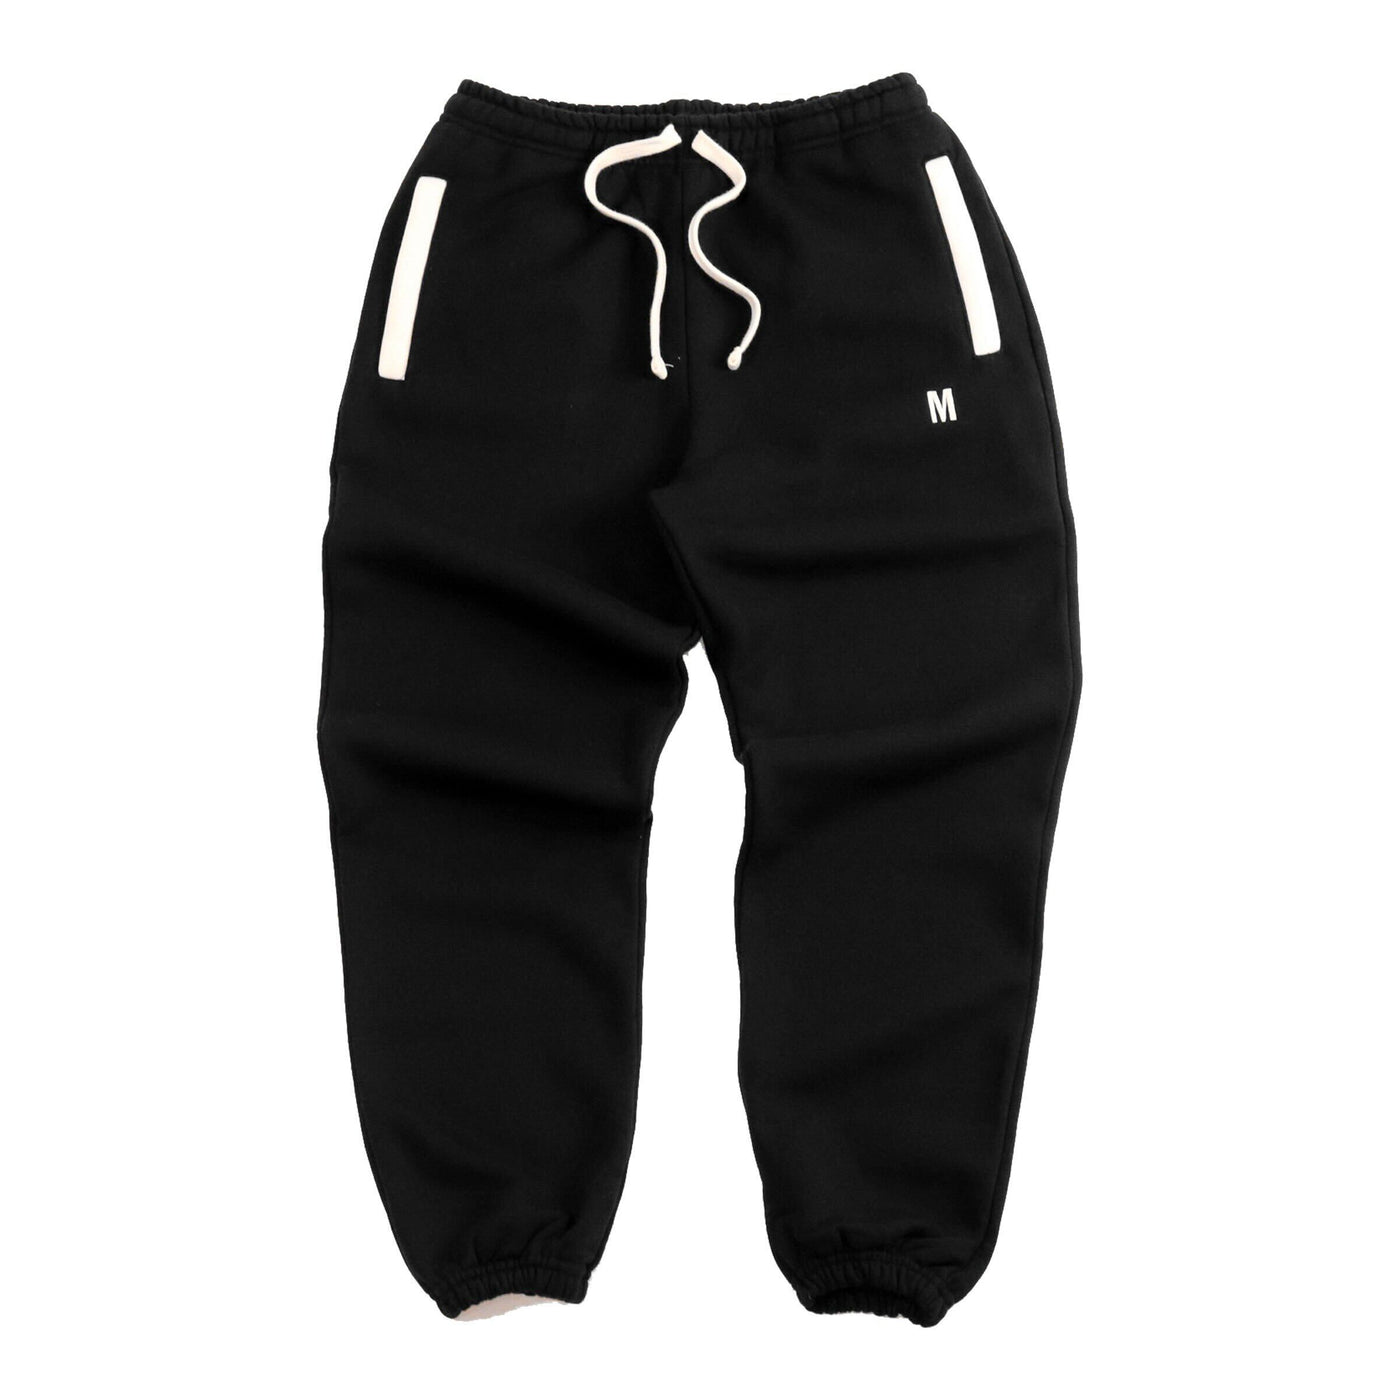 Limited Edition (Ultra) Marathon Pants - Black/Cream